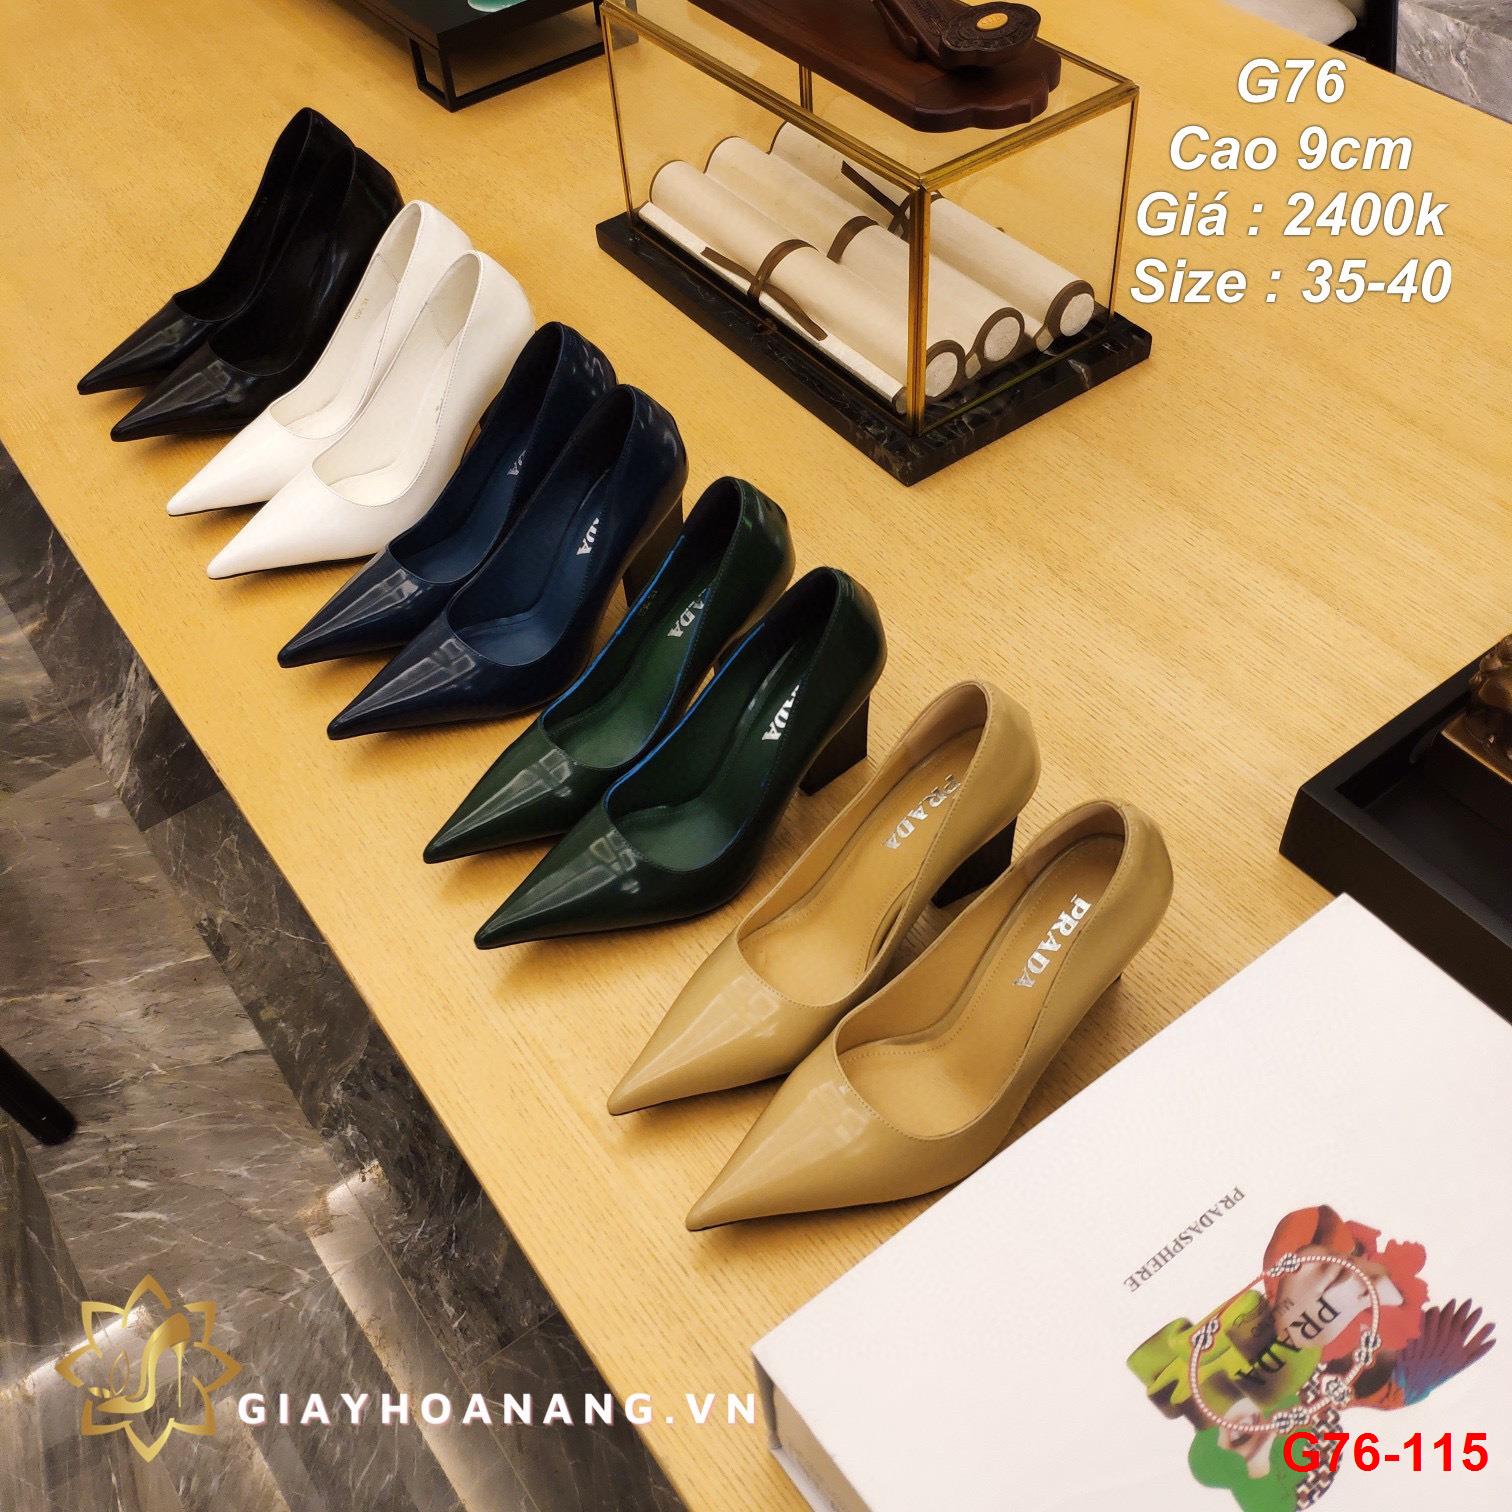 G76-115 Prada giày cao 9cm siêu cấp